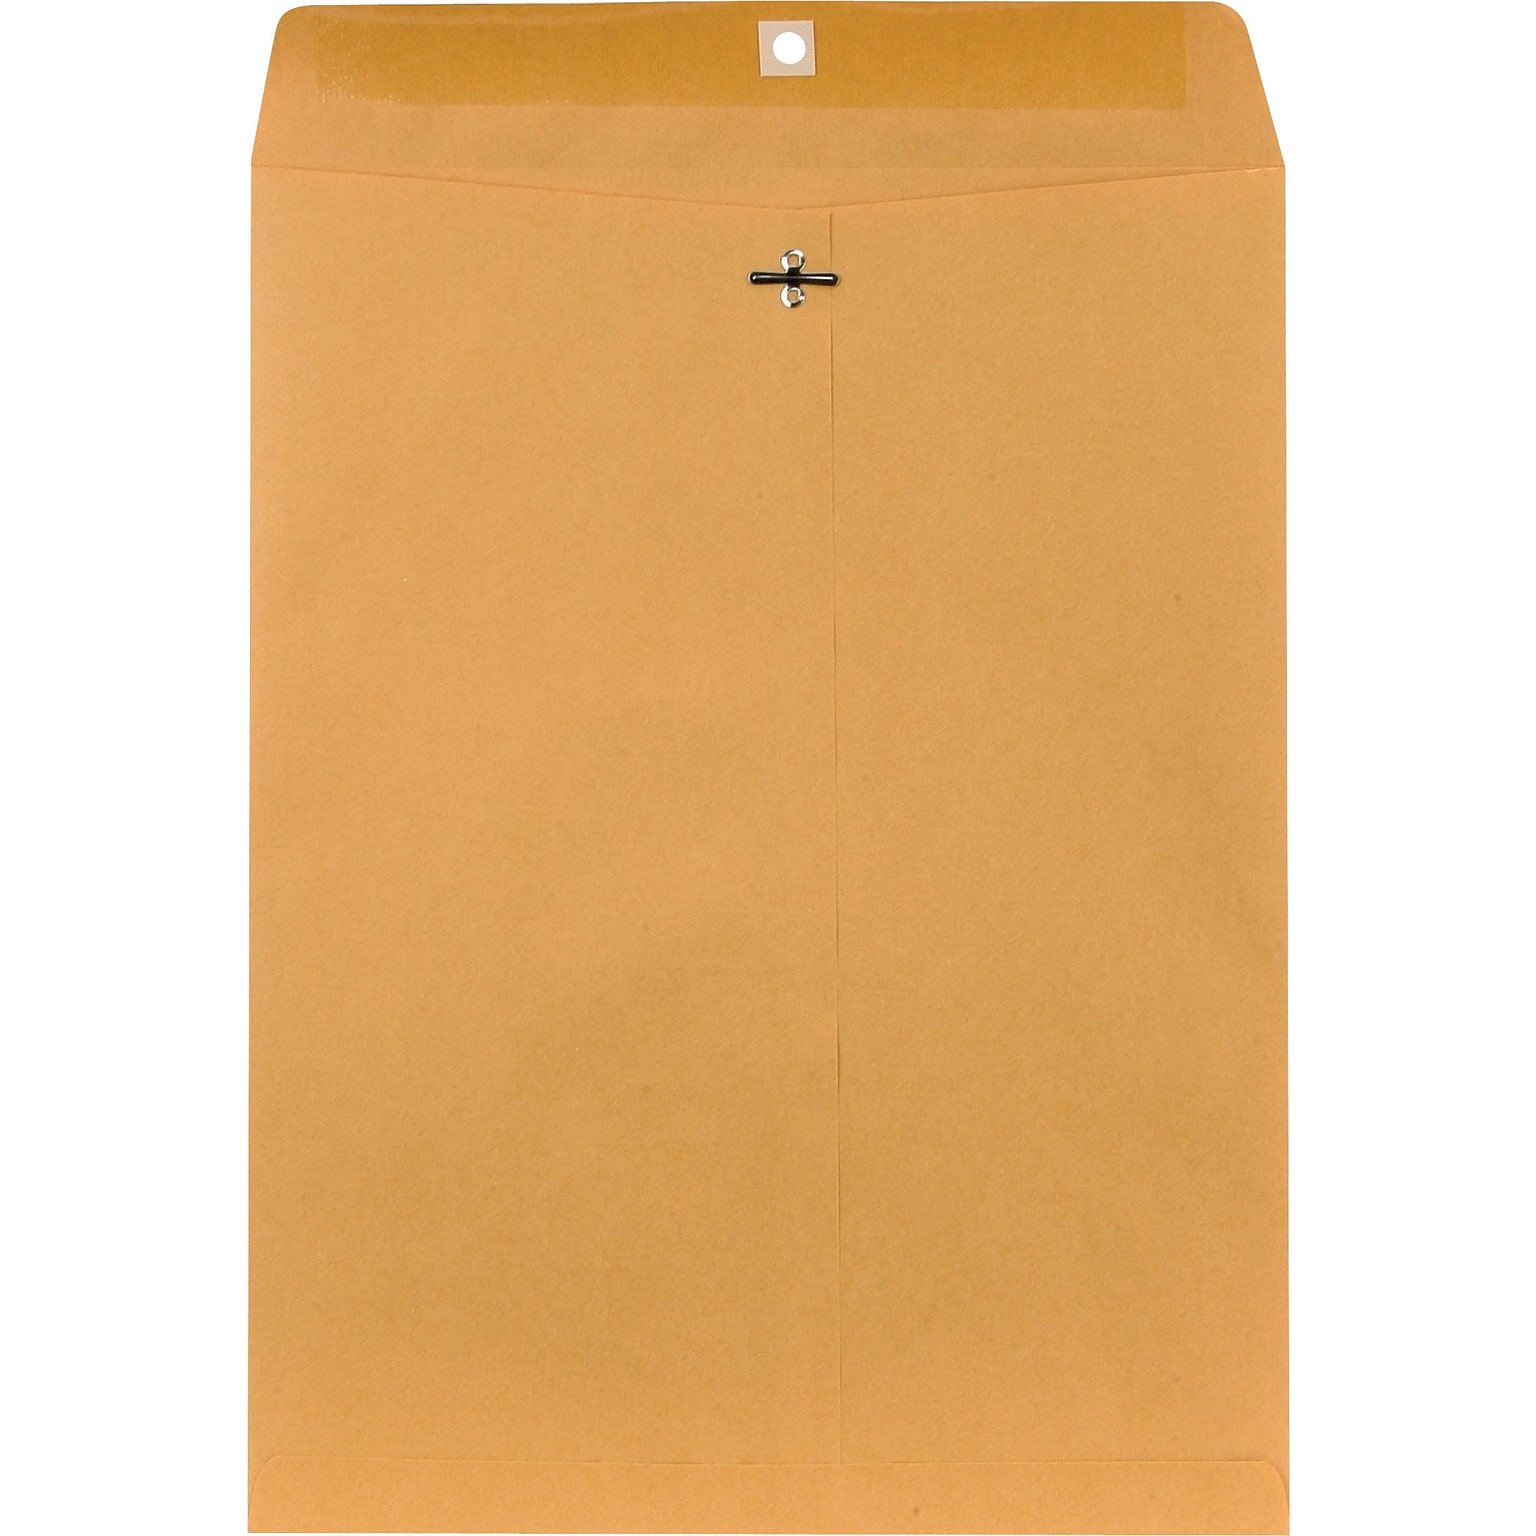 Staples Clasp Envelopes, 12 x 15-1/2, Brown Kraft, 100/Box (472902/19273)